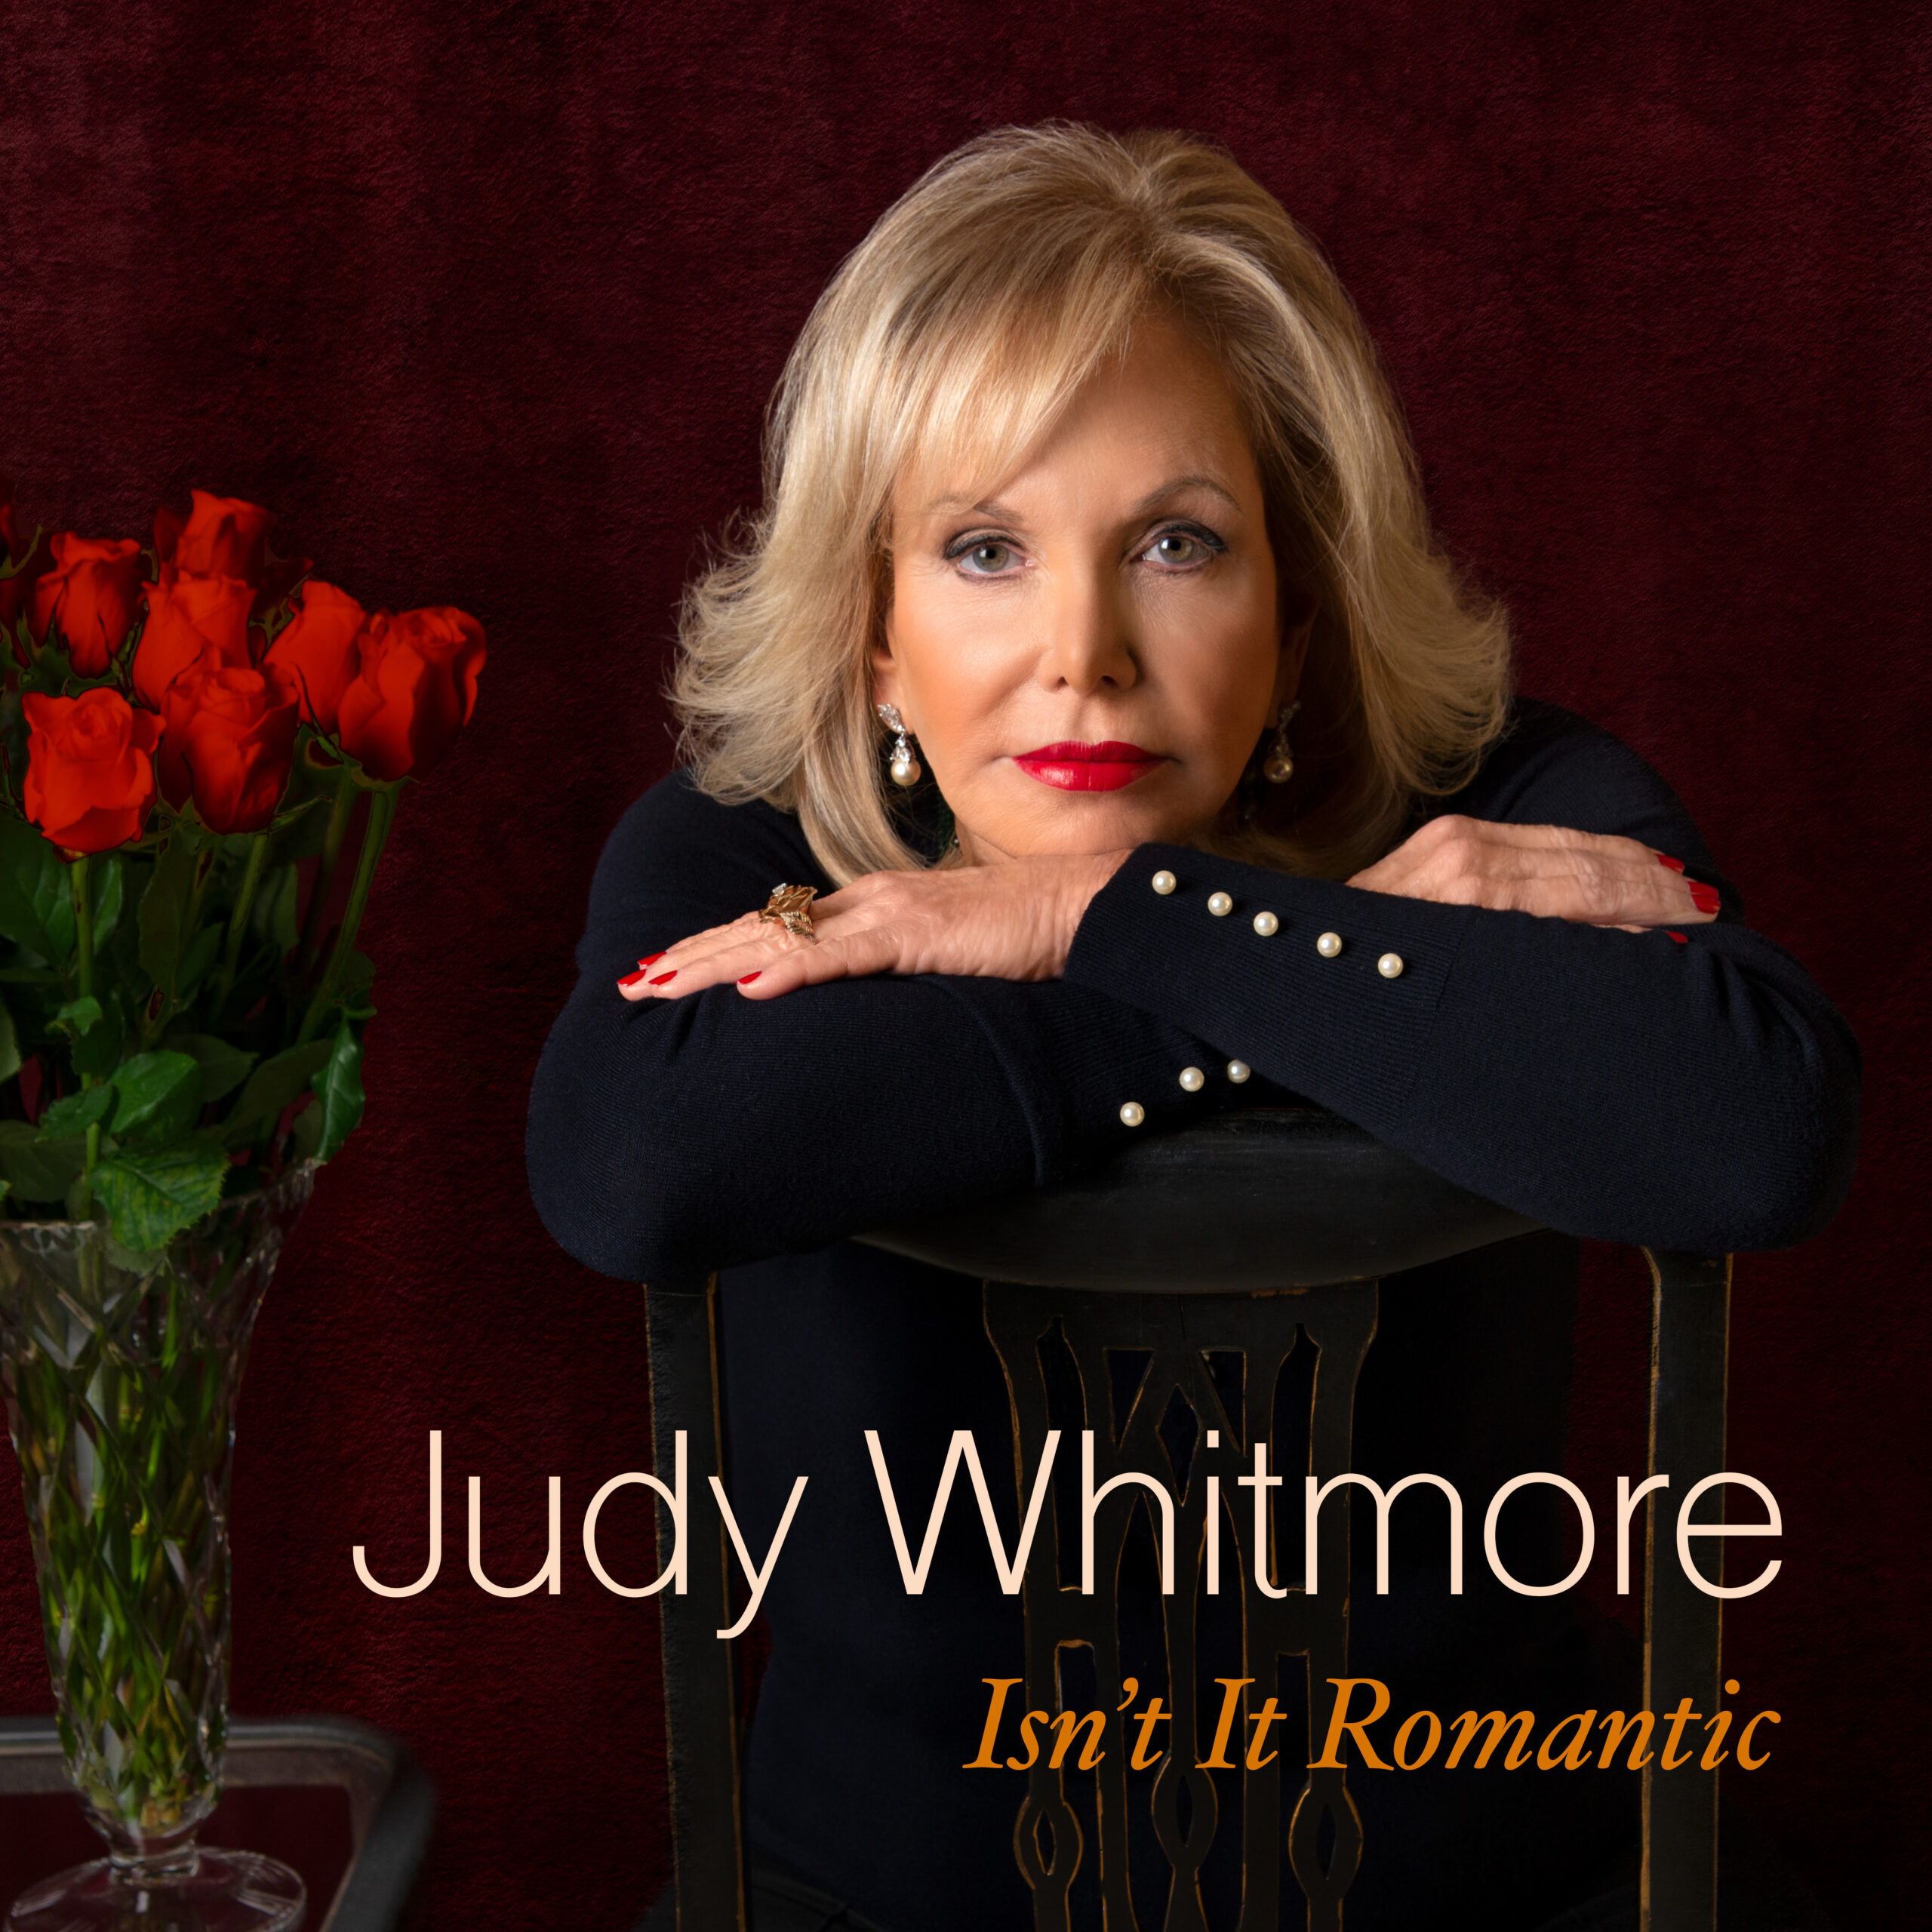 Full Album Credits for Judy Whitmore’s “Isn’t It Romantic”